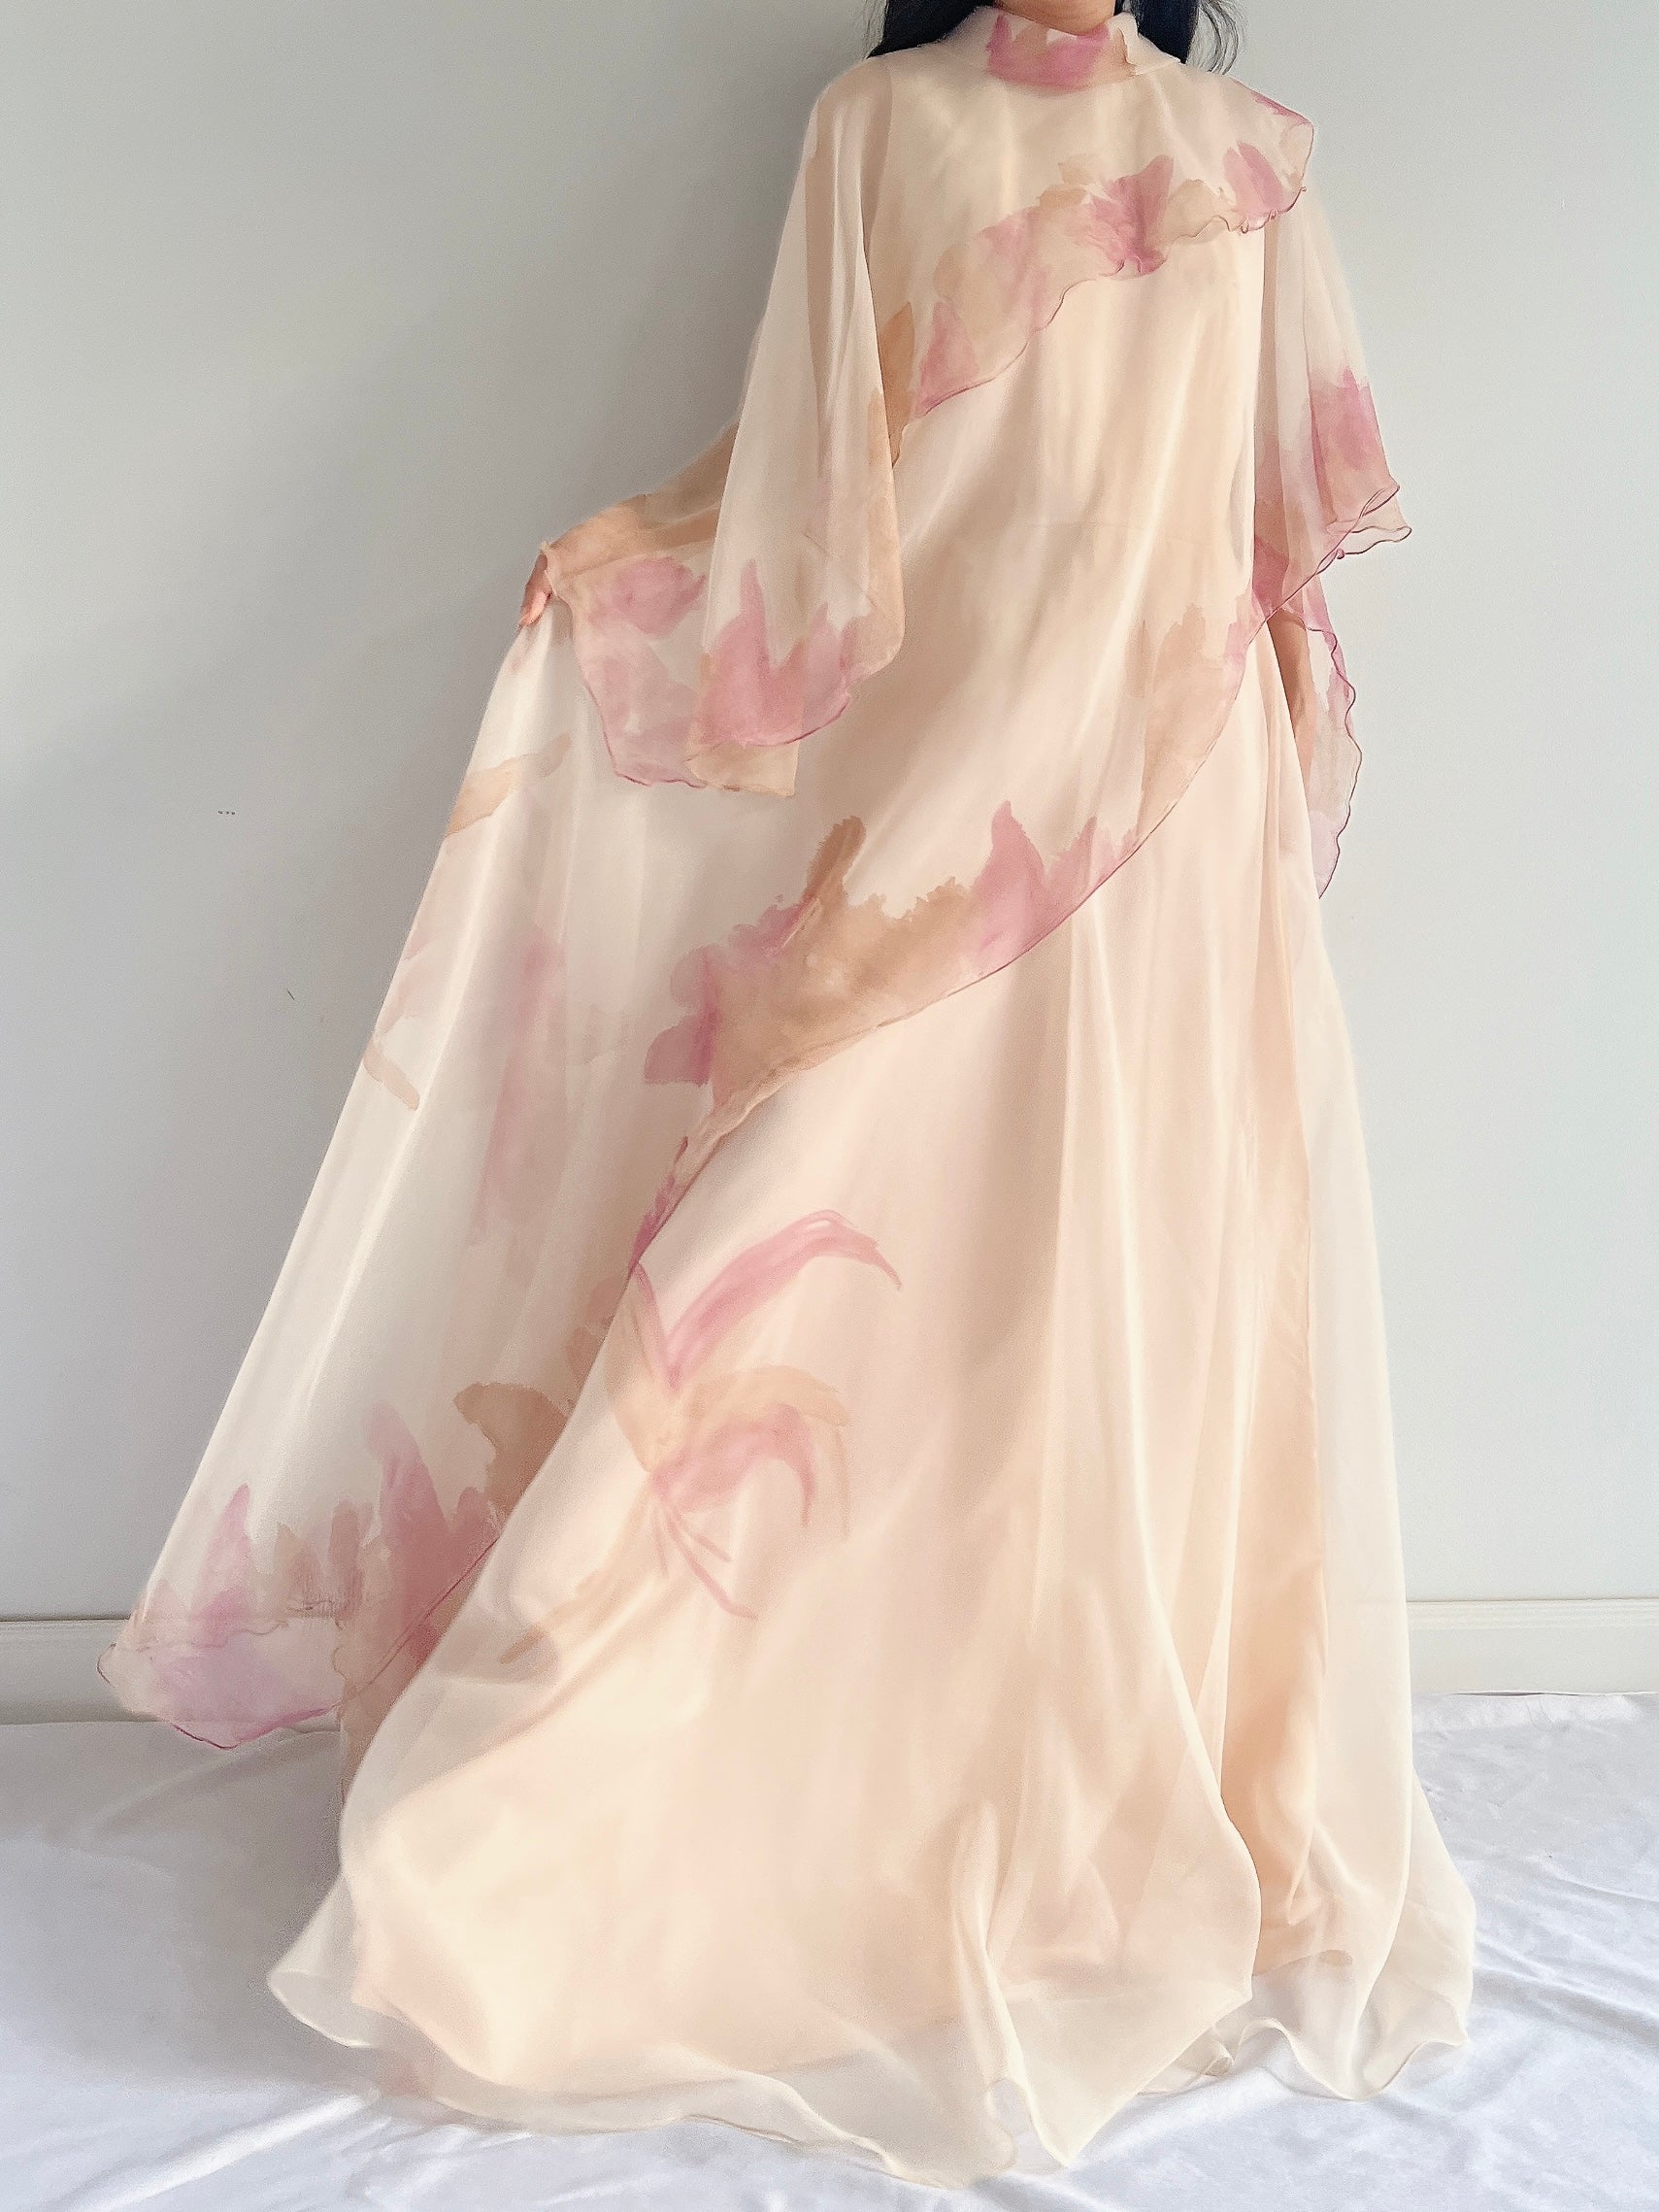 Vintage Chiffon Watercolor Gown - M